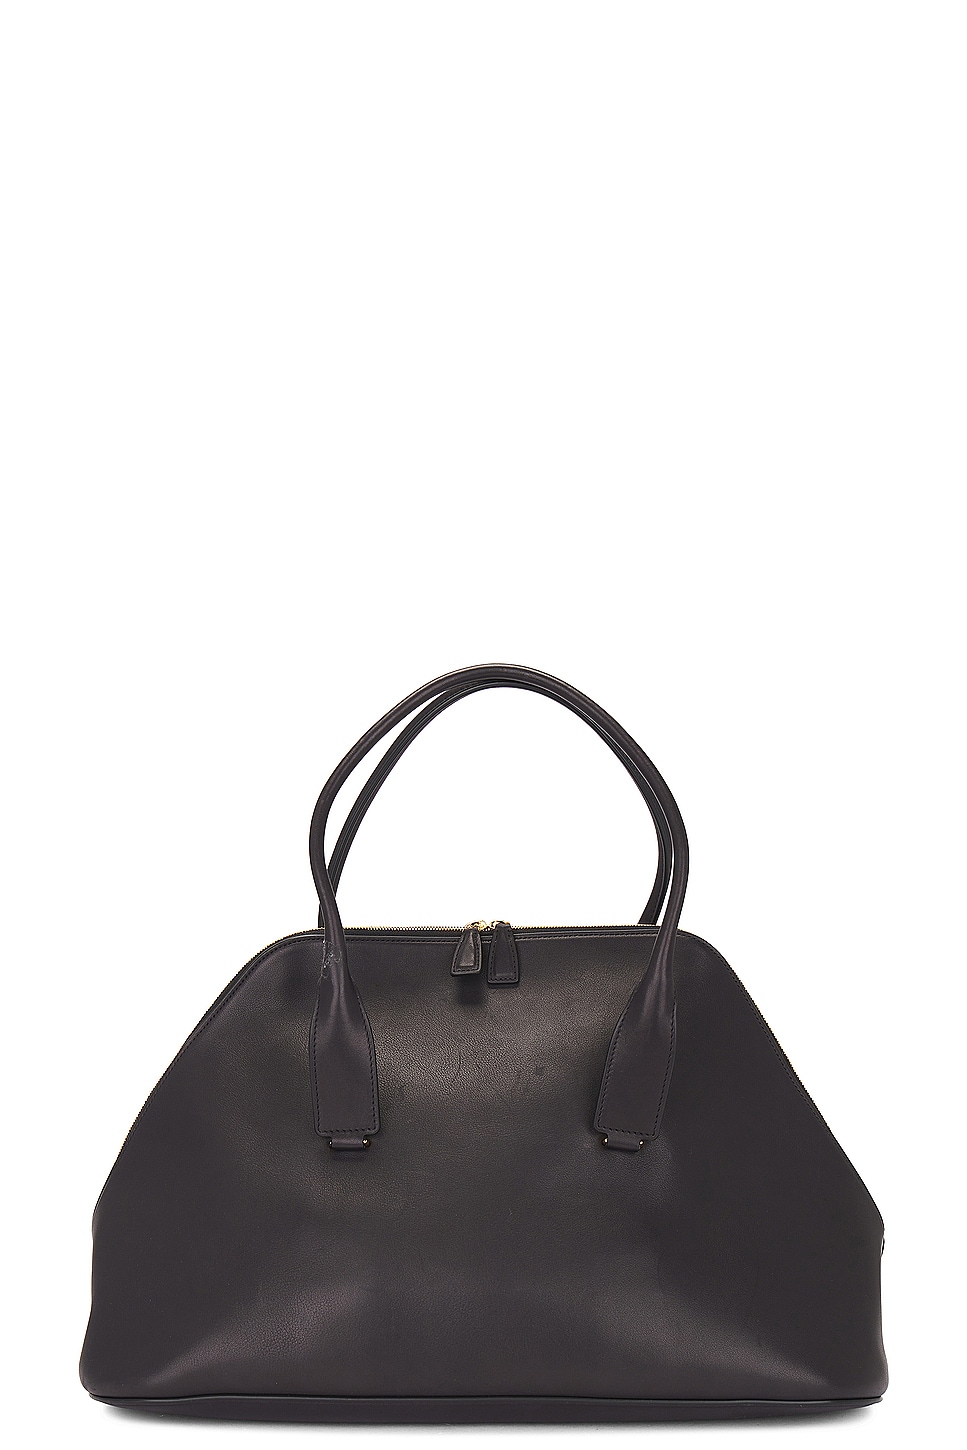 Devon Top Handle Bag in Black